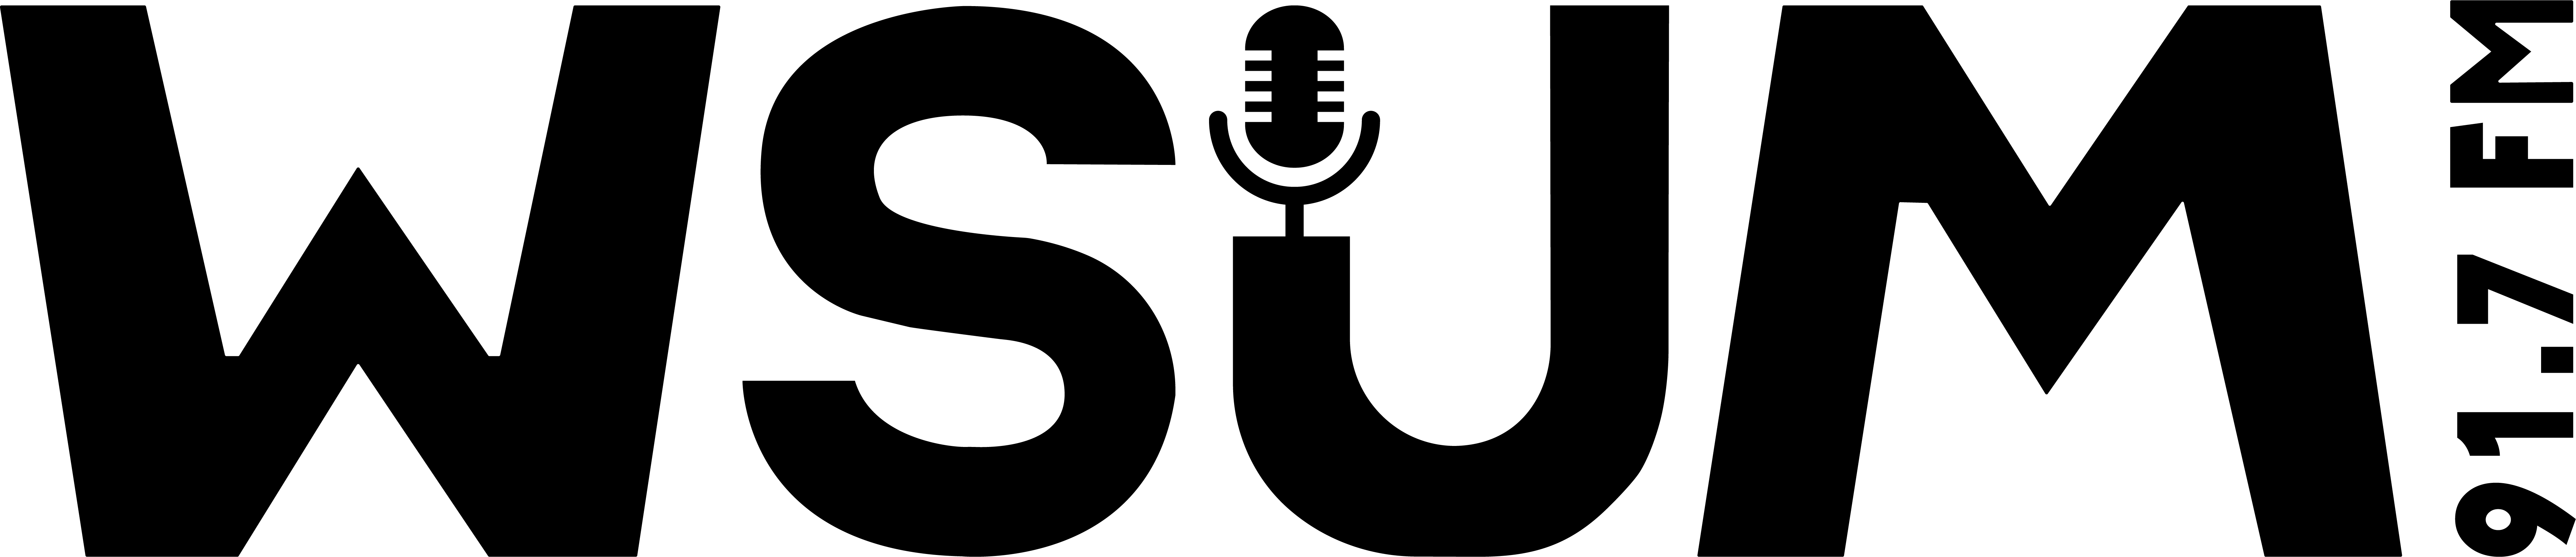 WSUM Logo